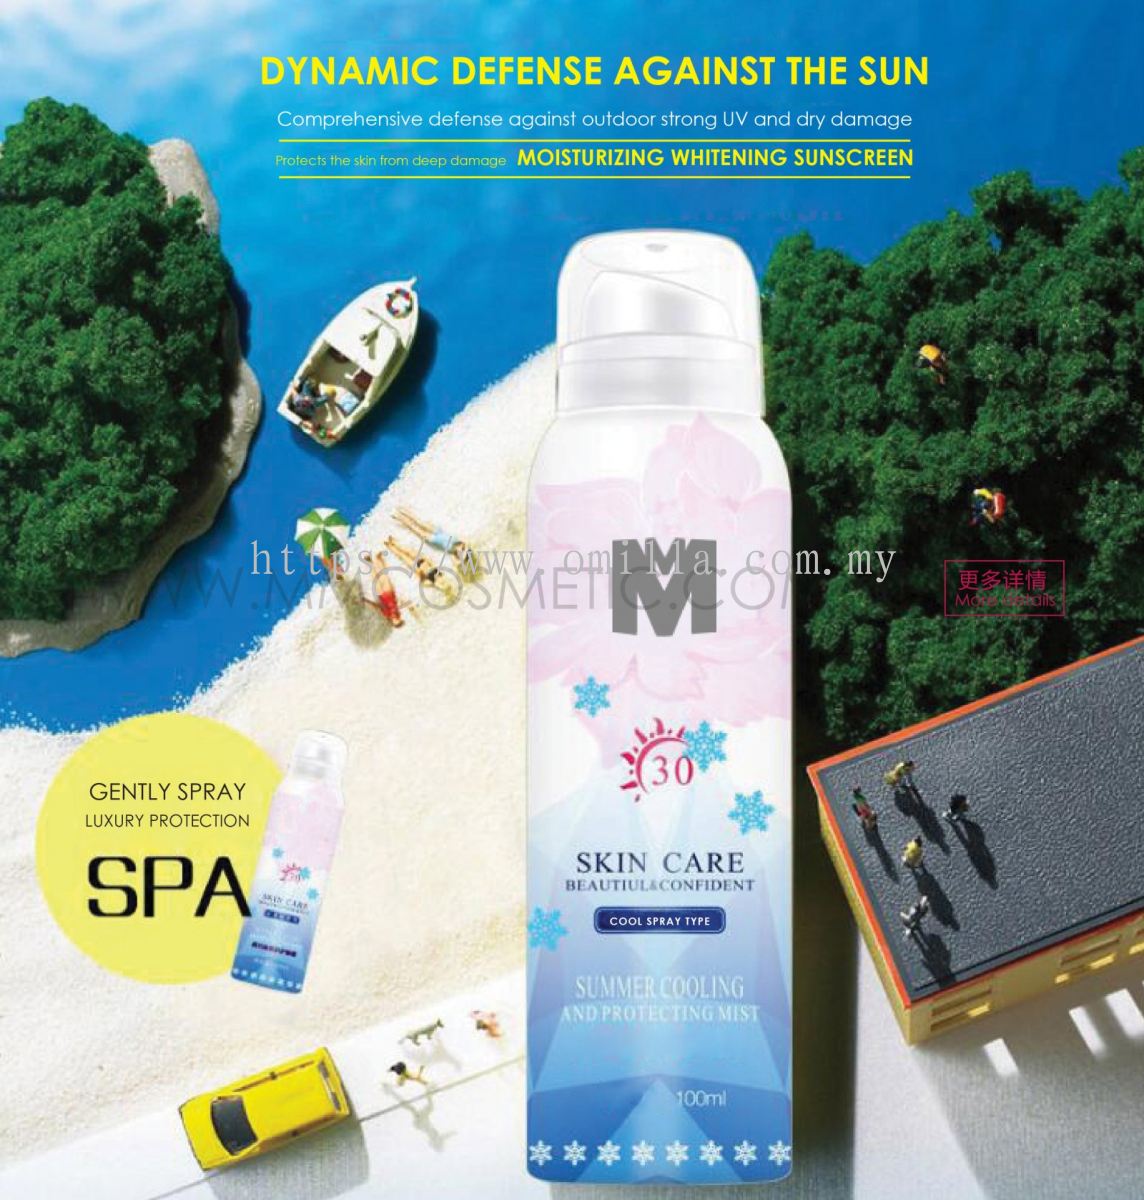 MM COSMETIC SDN BHD:Moisturizing Whitening Sunscreen